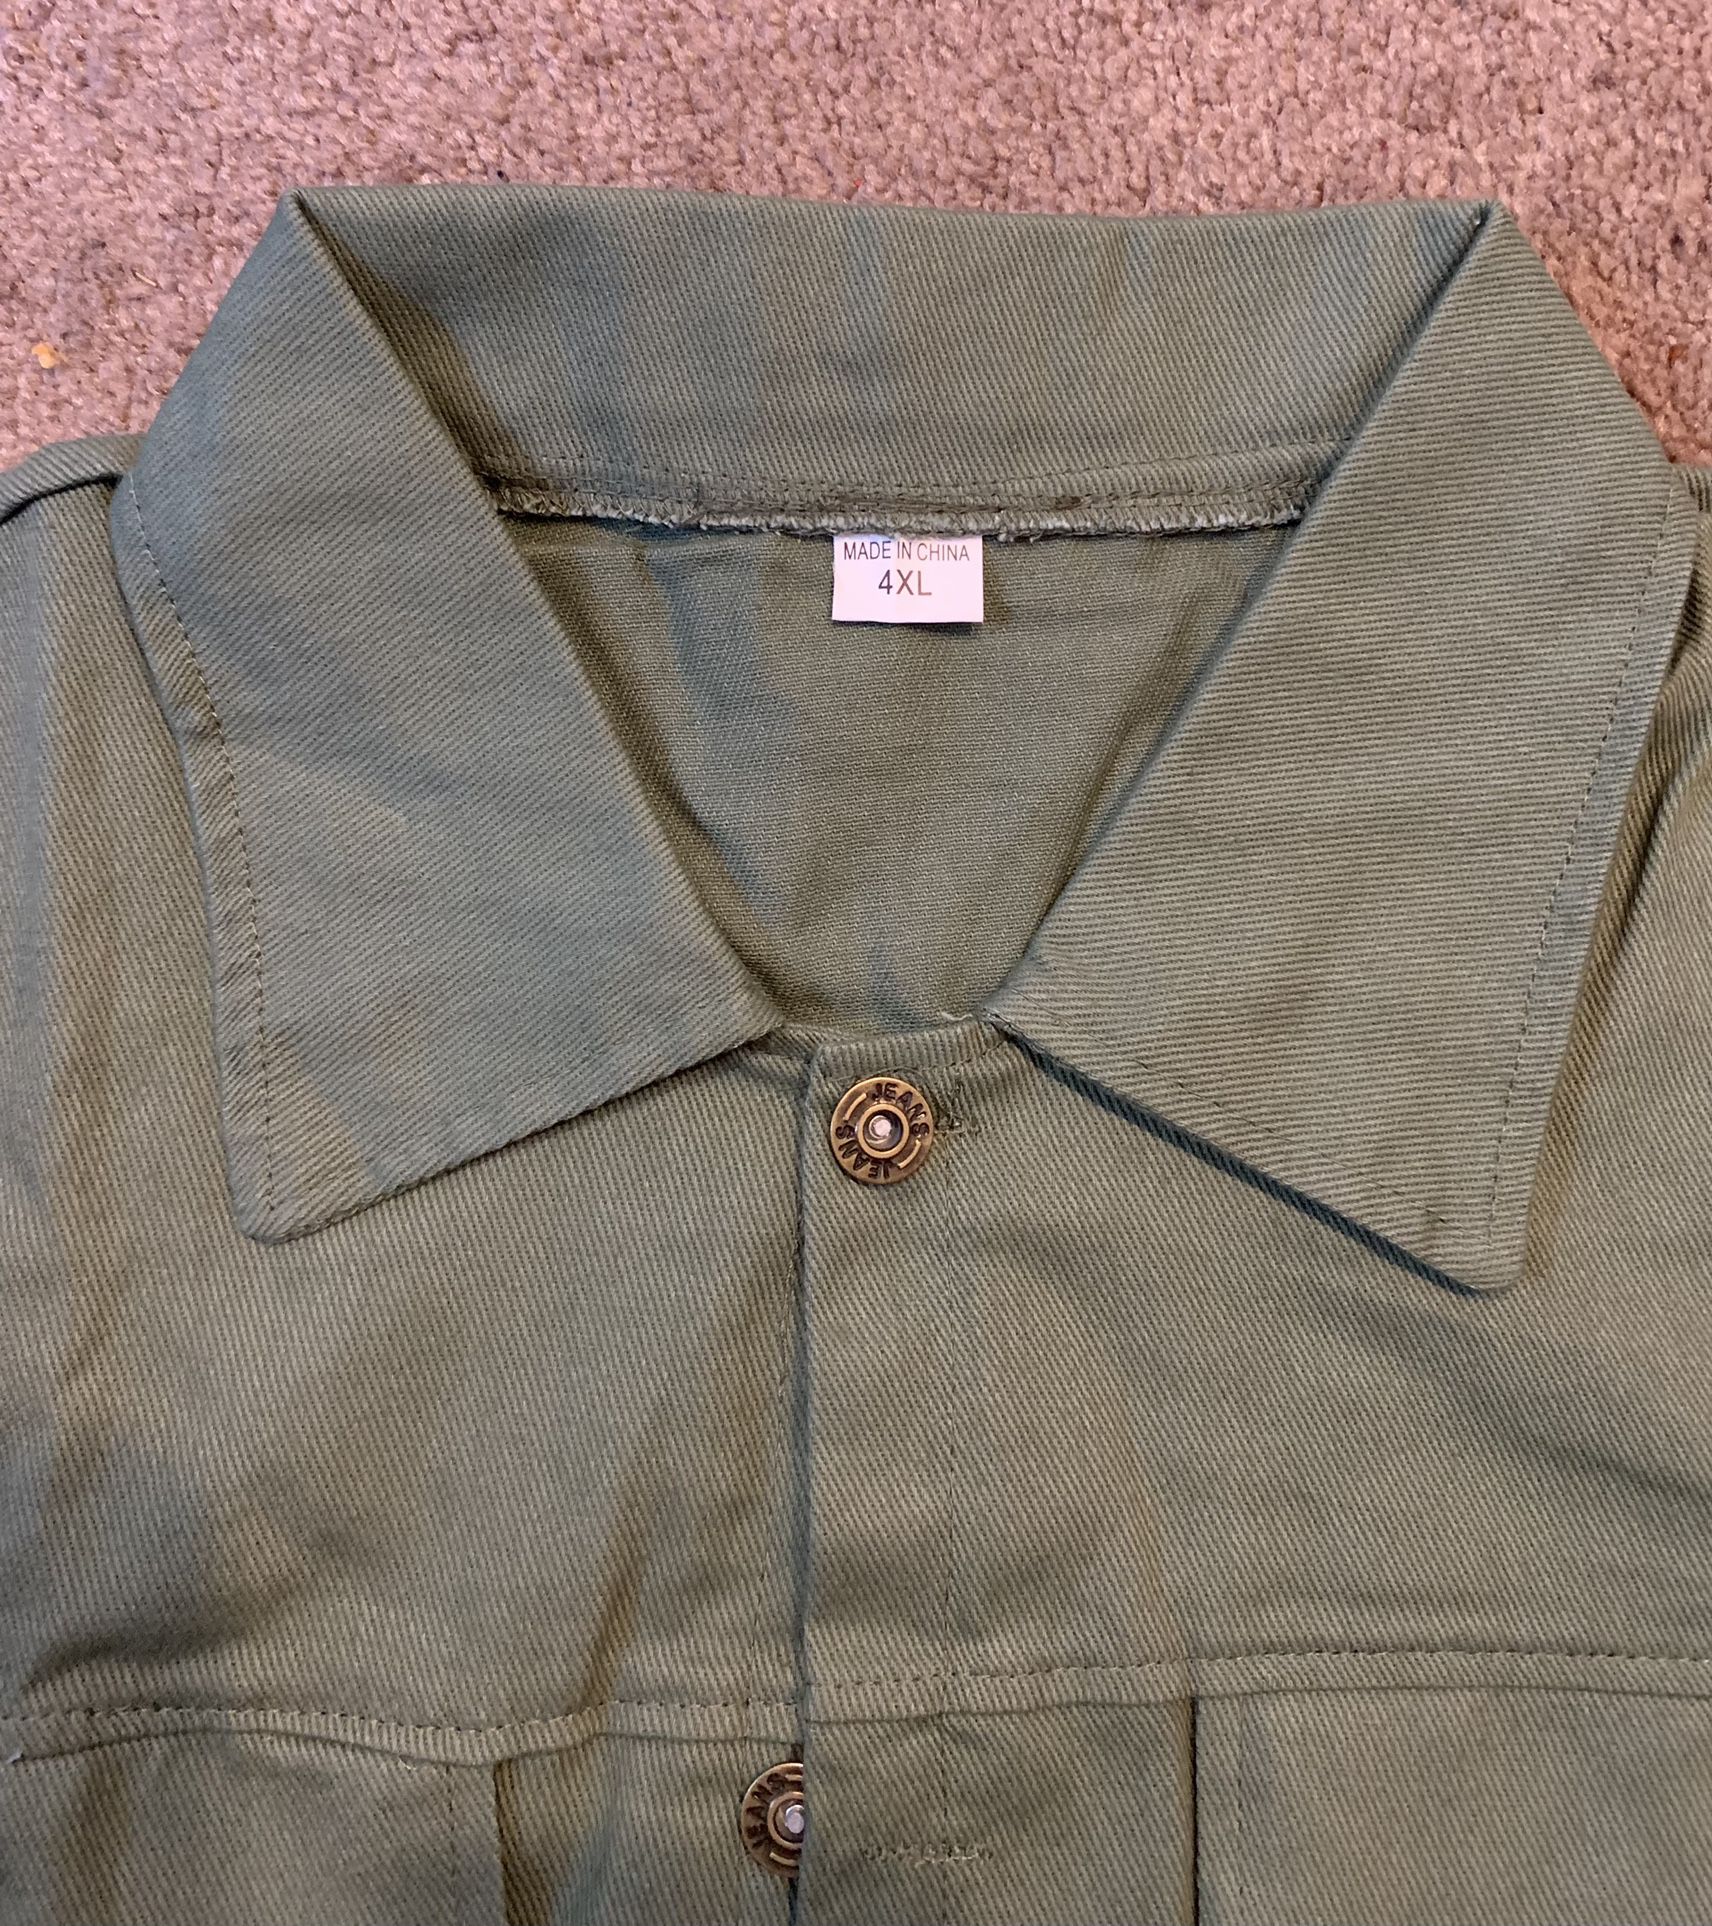 Men’s Premium Faded Denim 2XL Cotton Jean Button Up Green Jacket Casual Tops 4XL